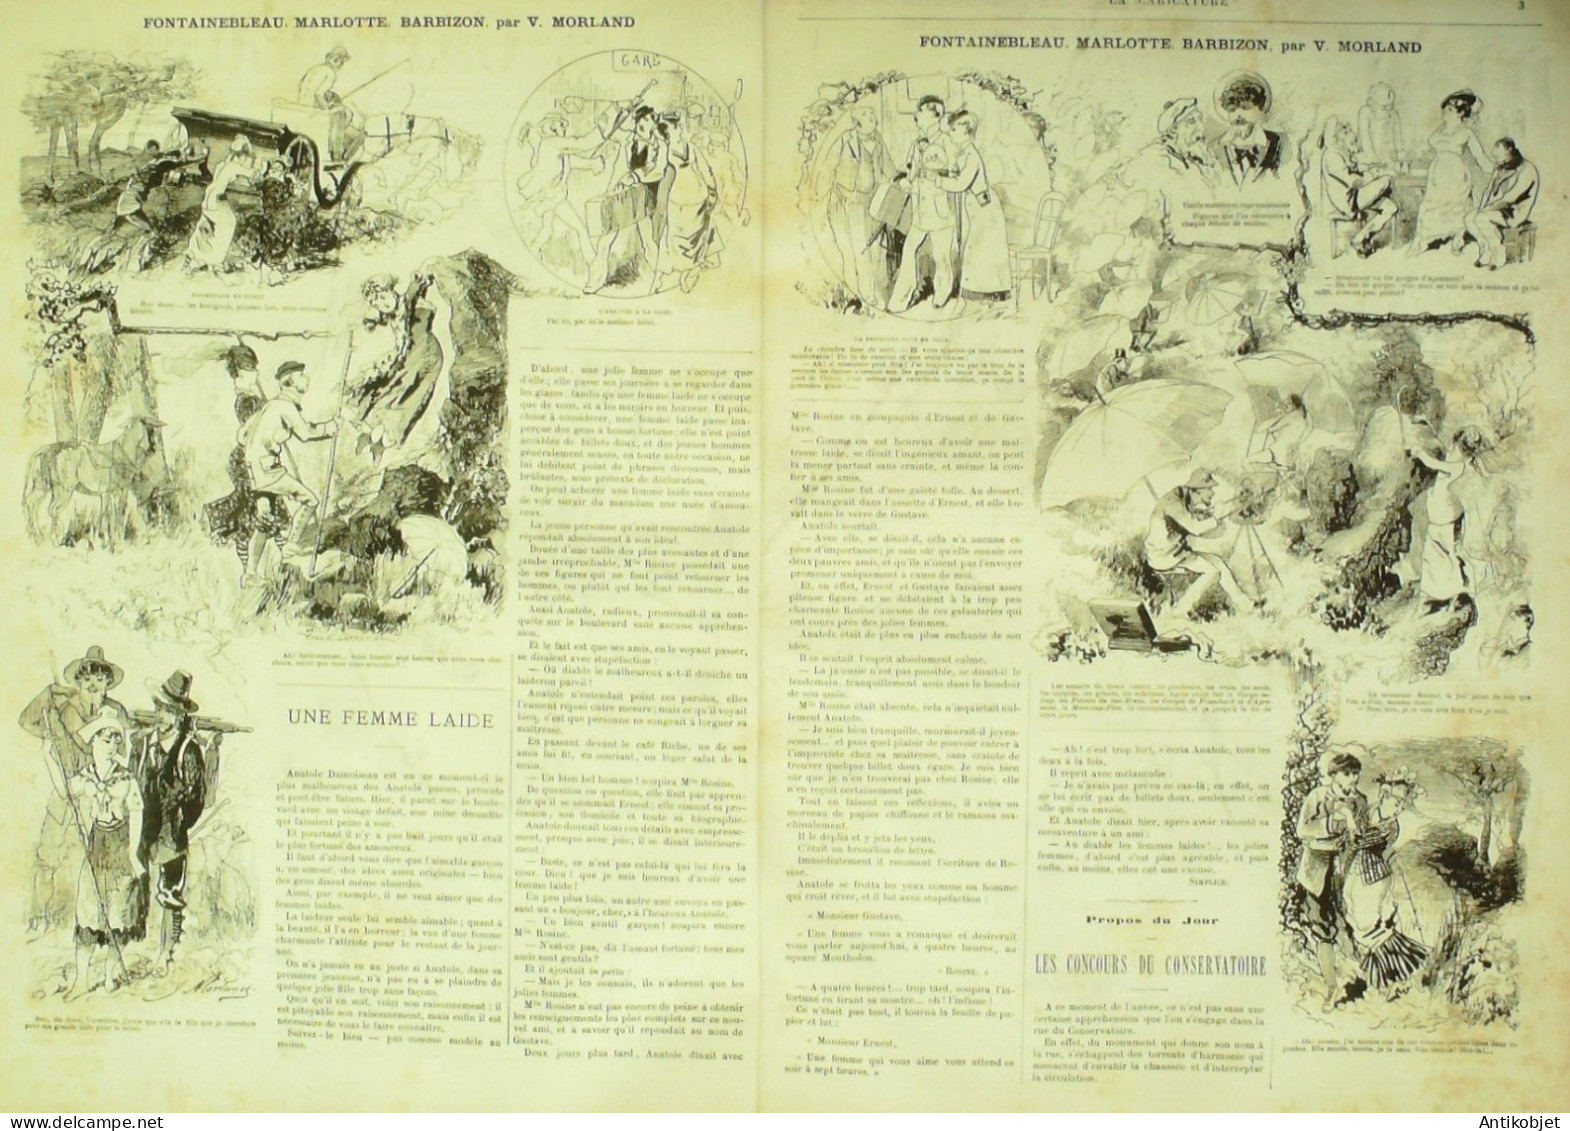 La Caricature 1880 N°  32 Aventures Des Touristes En Suisse Robida Moloch Morland - Magazines - Before 1900